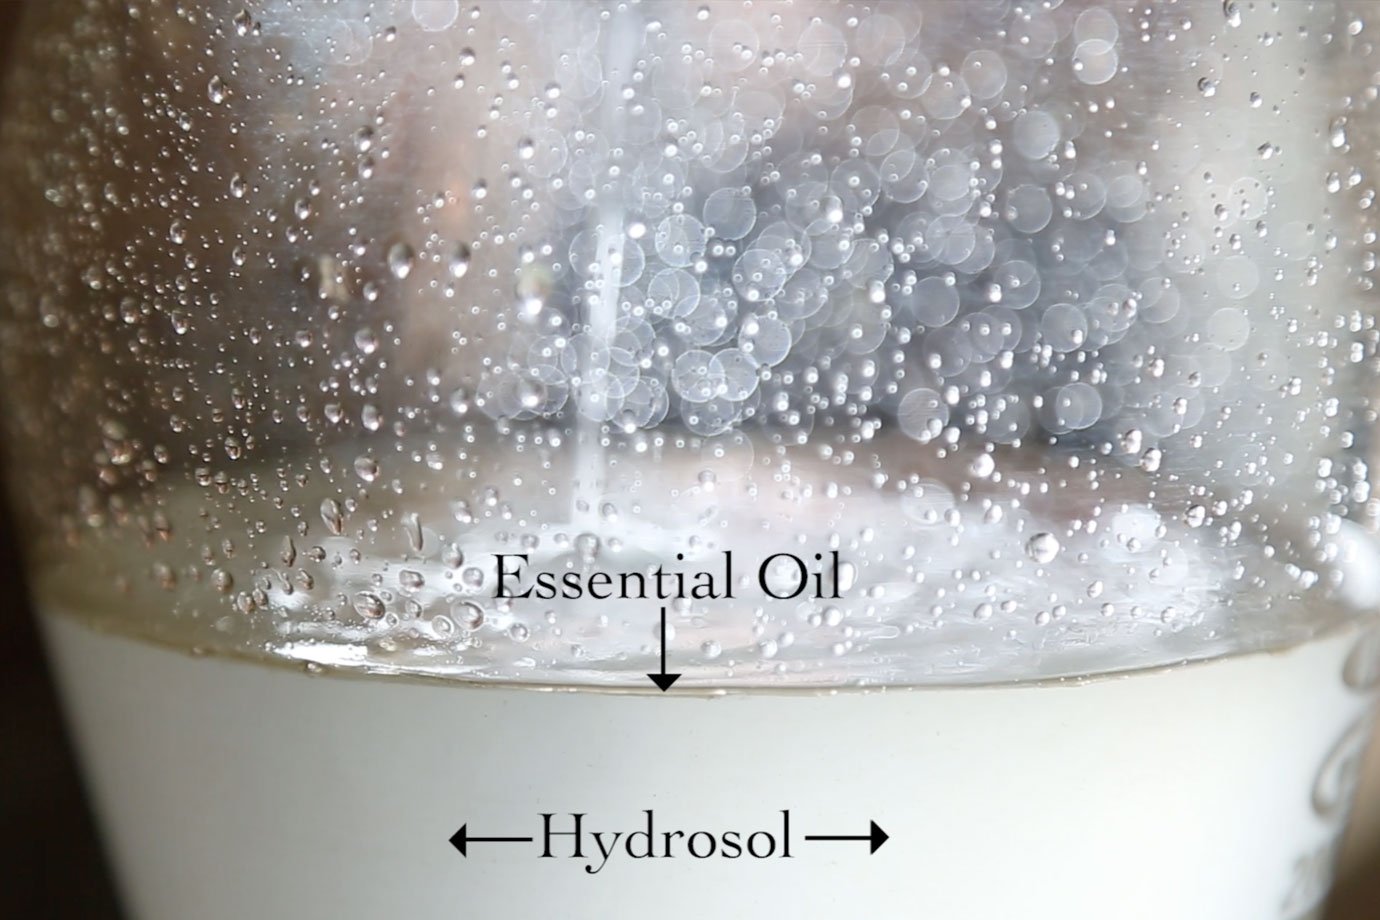 hydrosol and essential oil